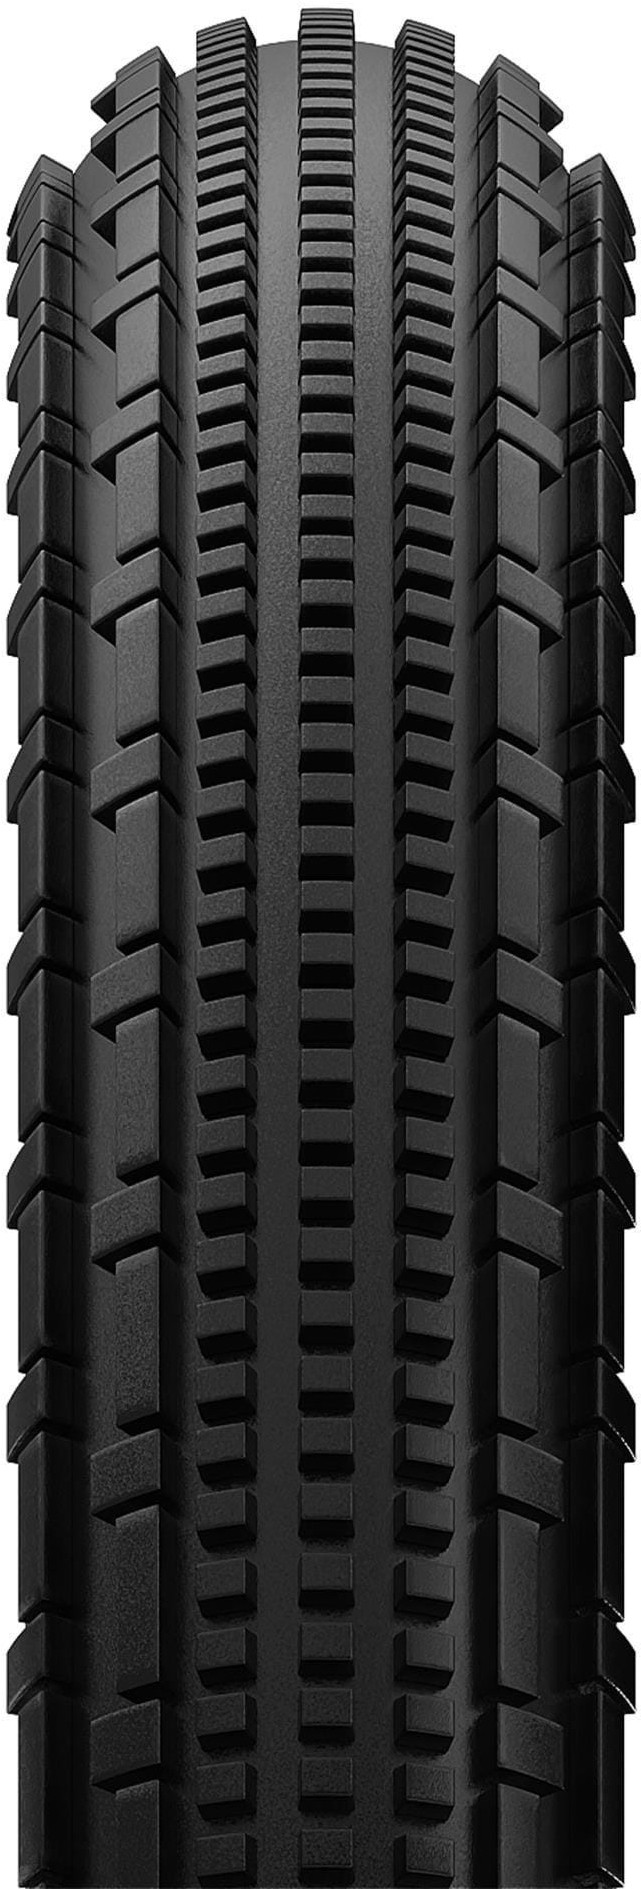 Gravelking SK R-Line TLR 700c Gravel Tyre image 1